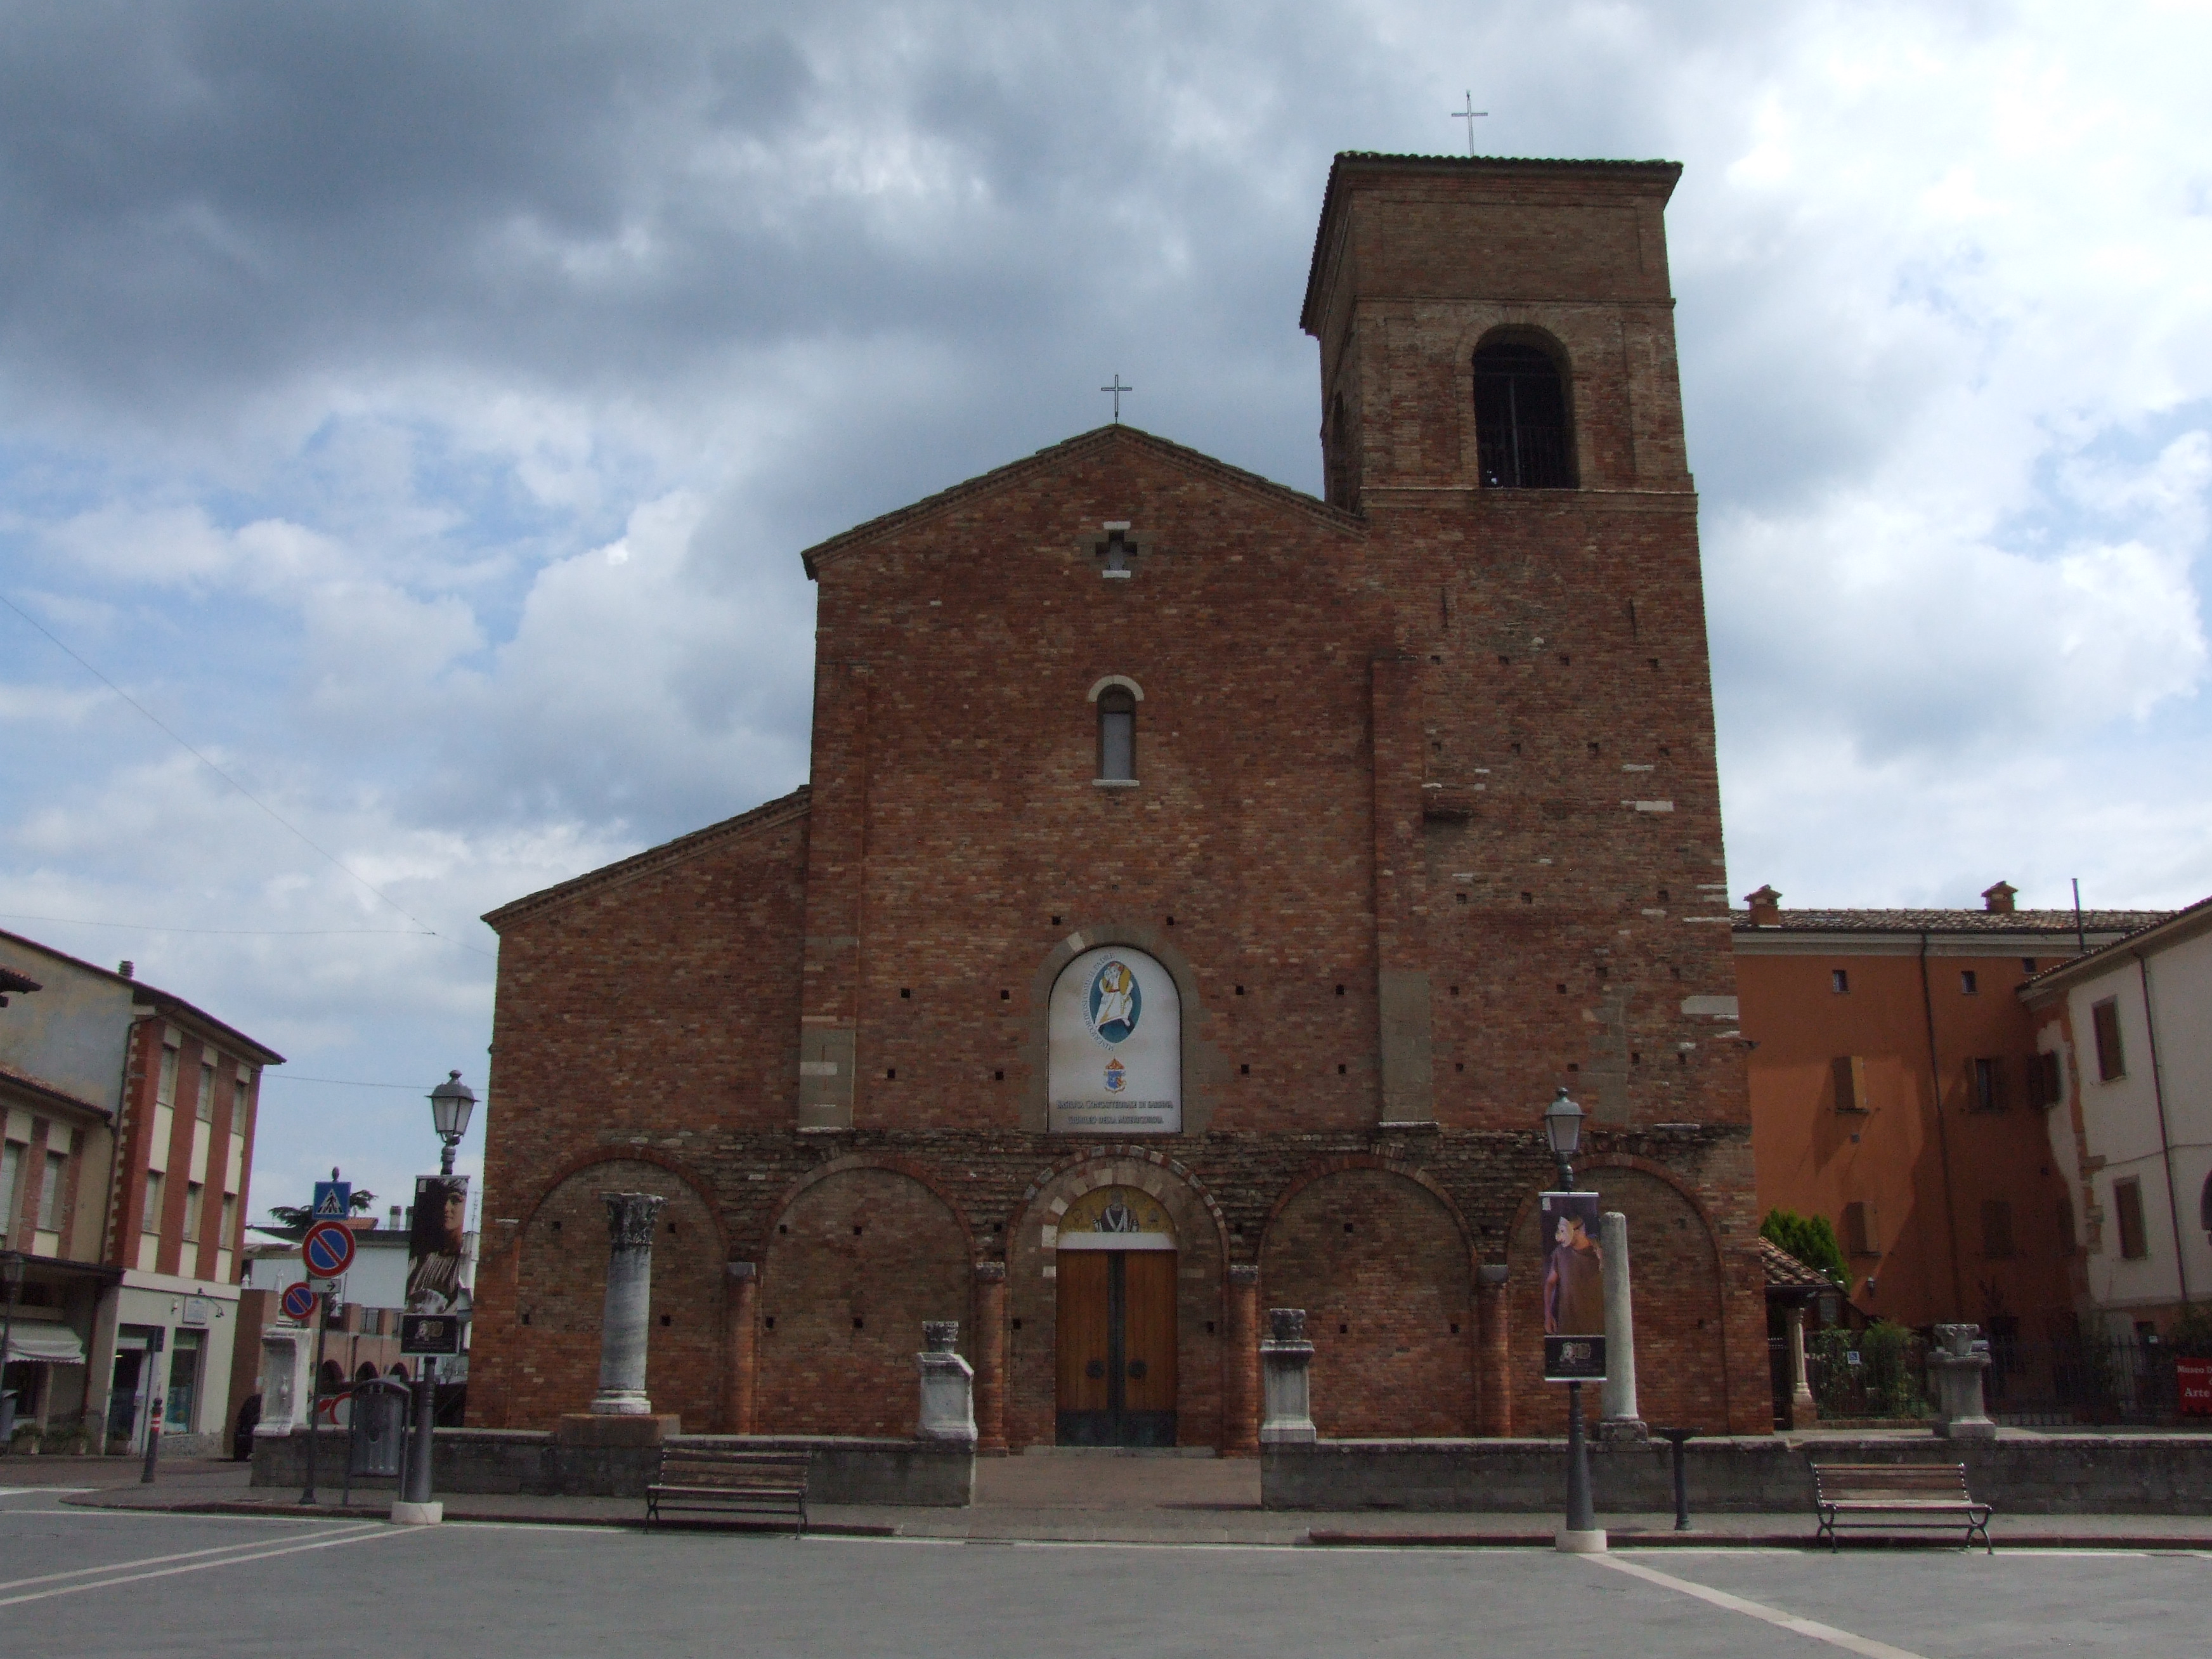 photo: https://upload.wikimedia.org/wikipedia/commons/2/28/Basilica_concattedrale_di_Sarsina_-_11.jpg